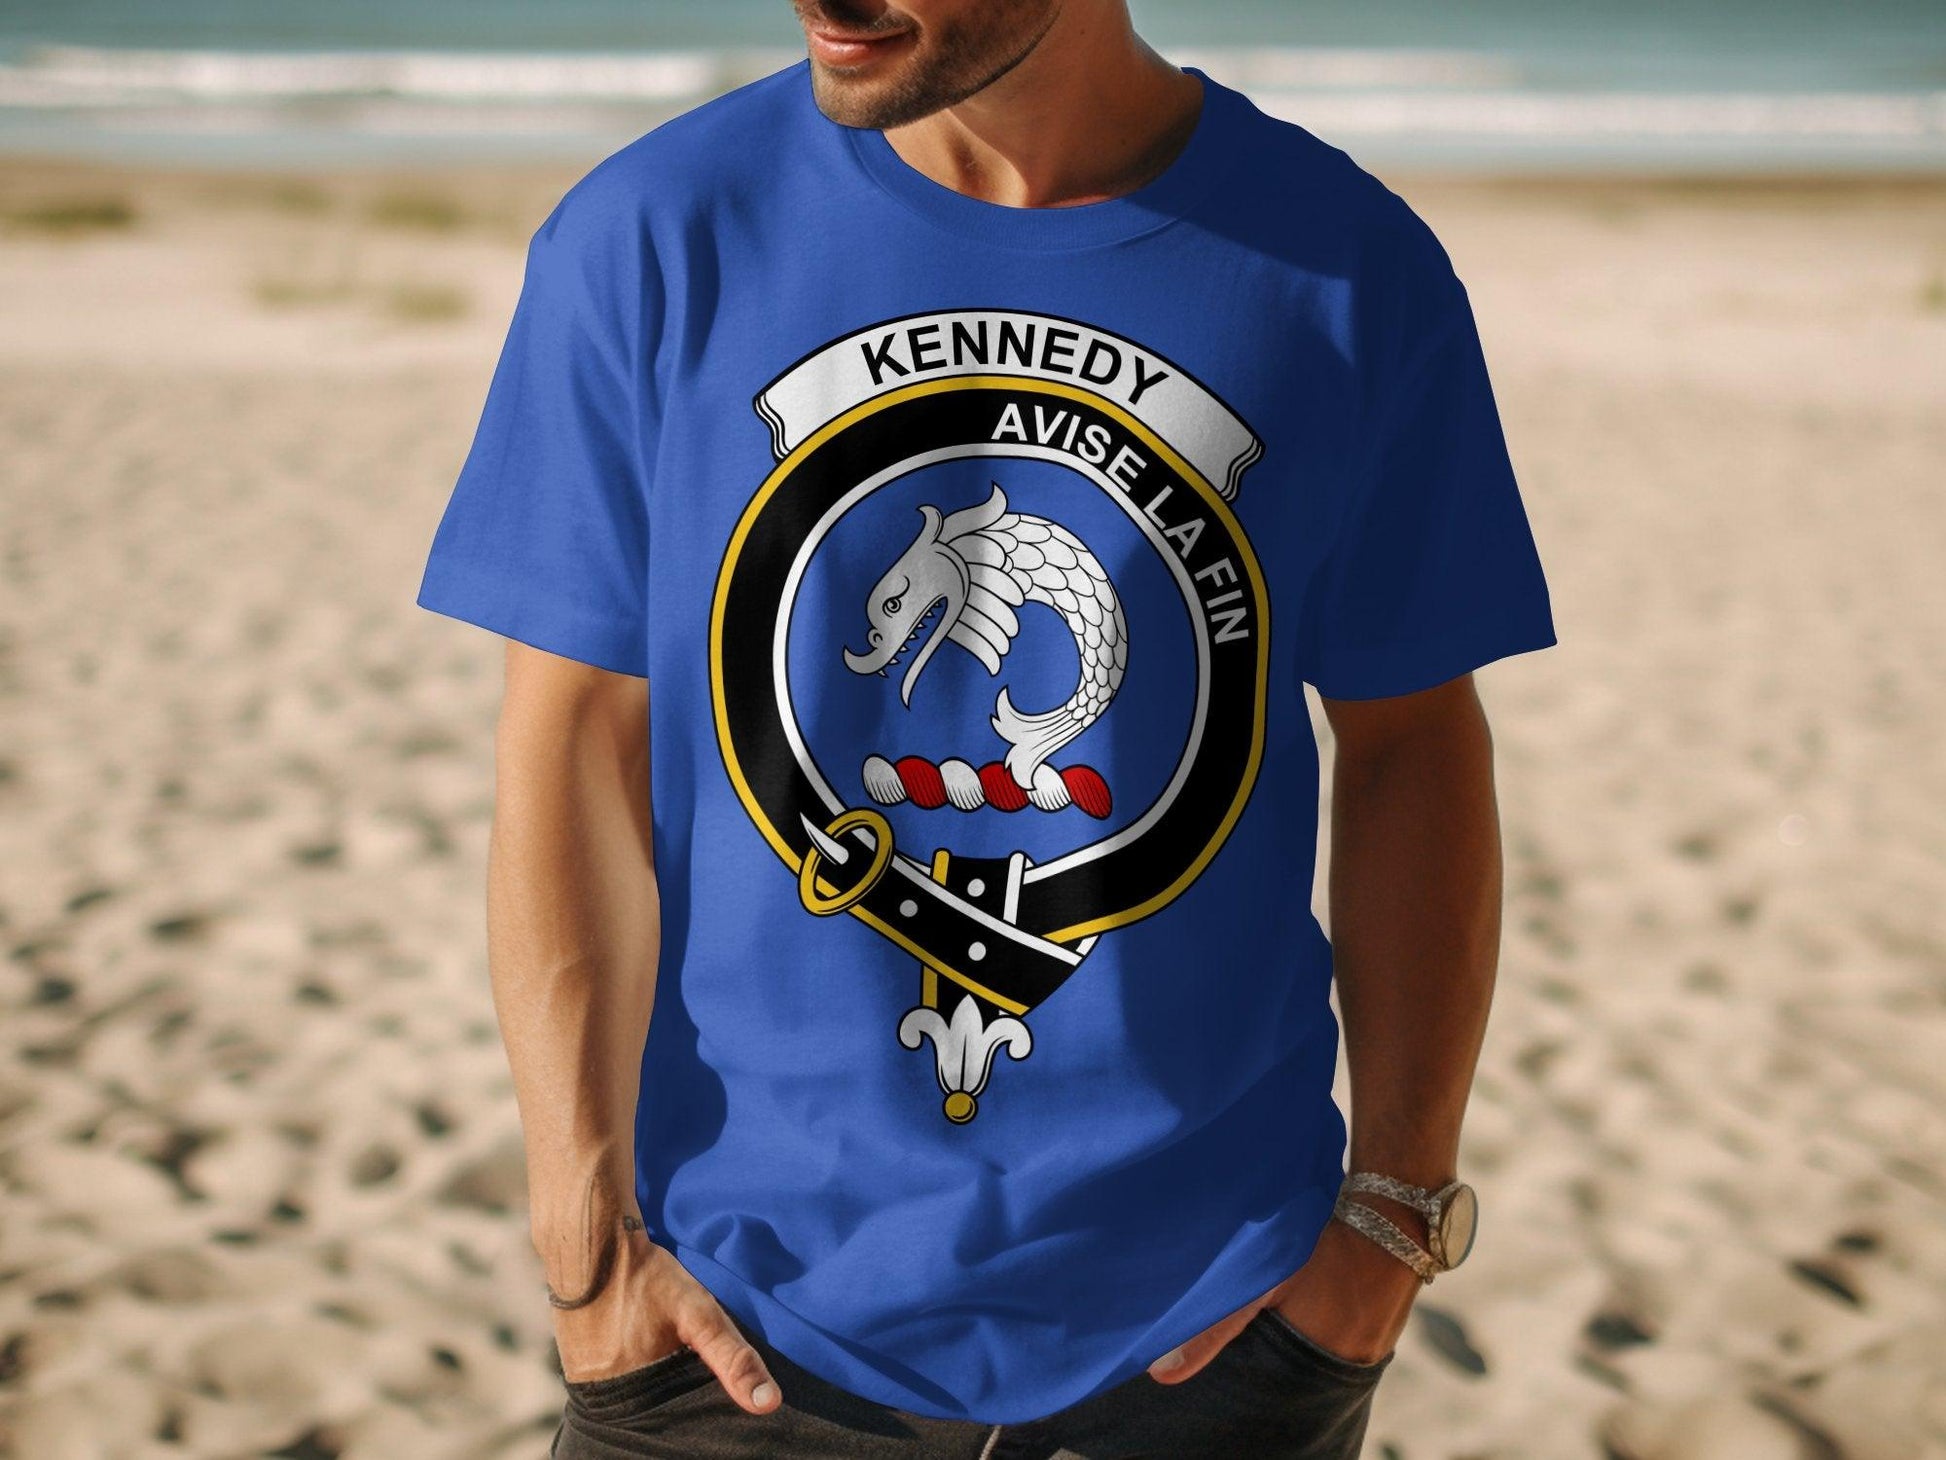 Kennedy Avise La Fin Scottish Clan Crest T-Shirt - Living Stone Gifts